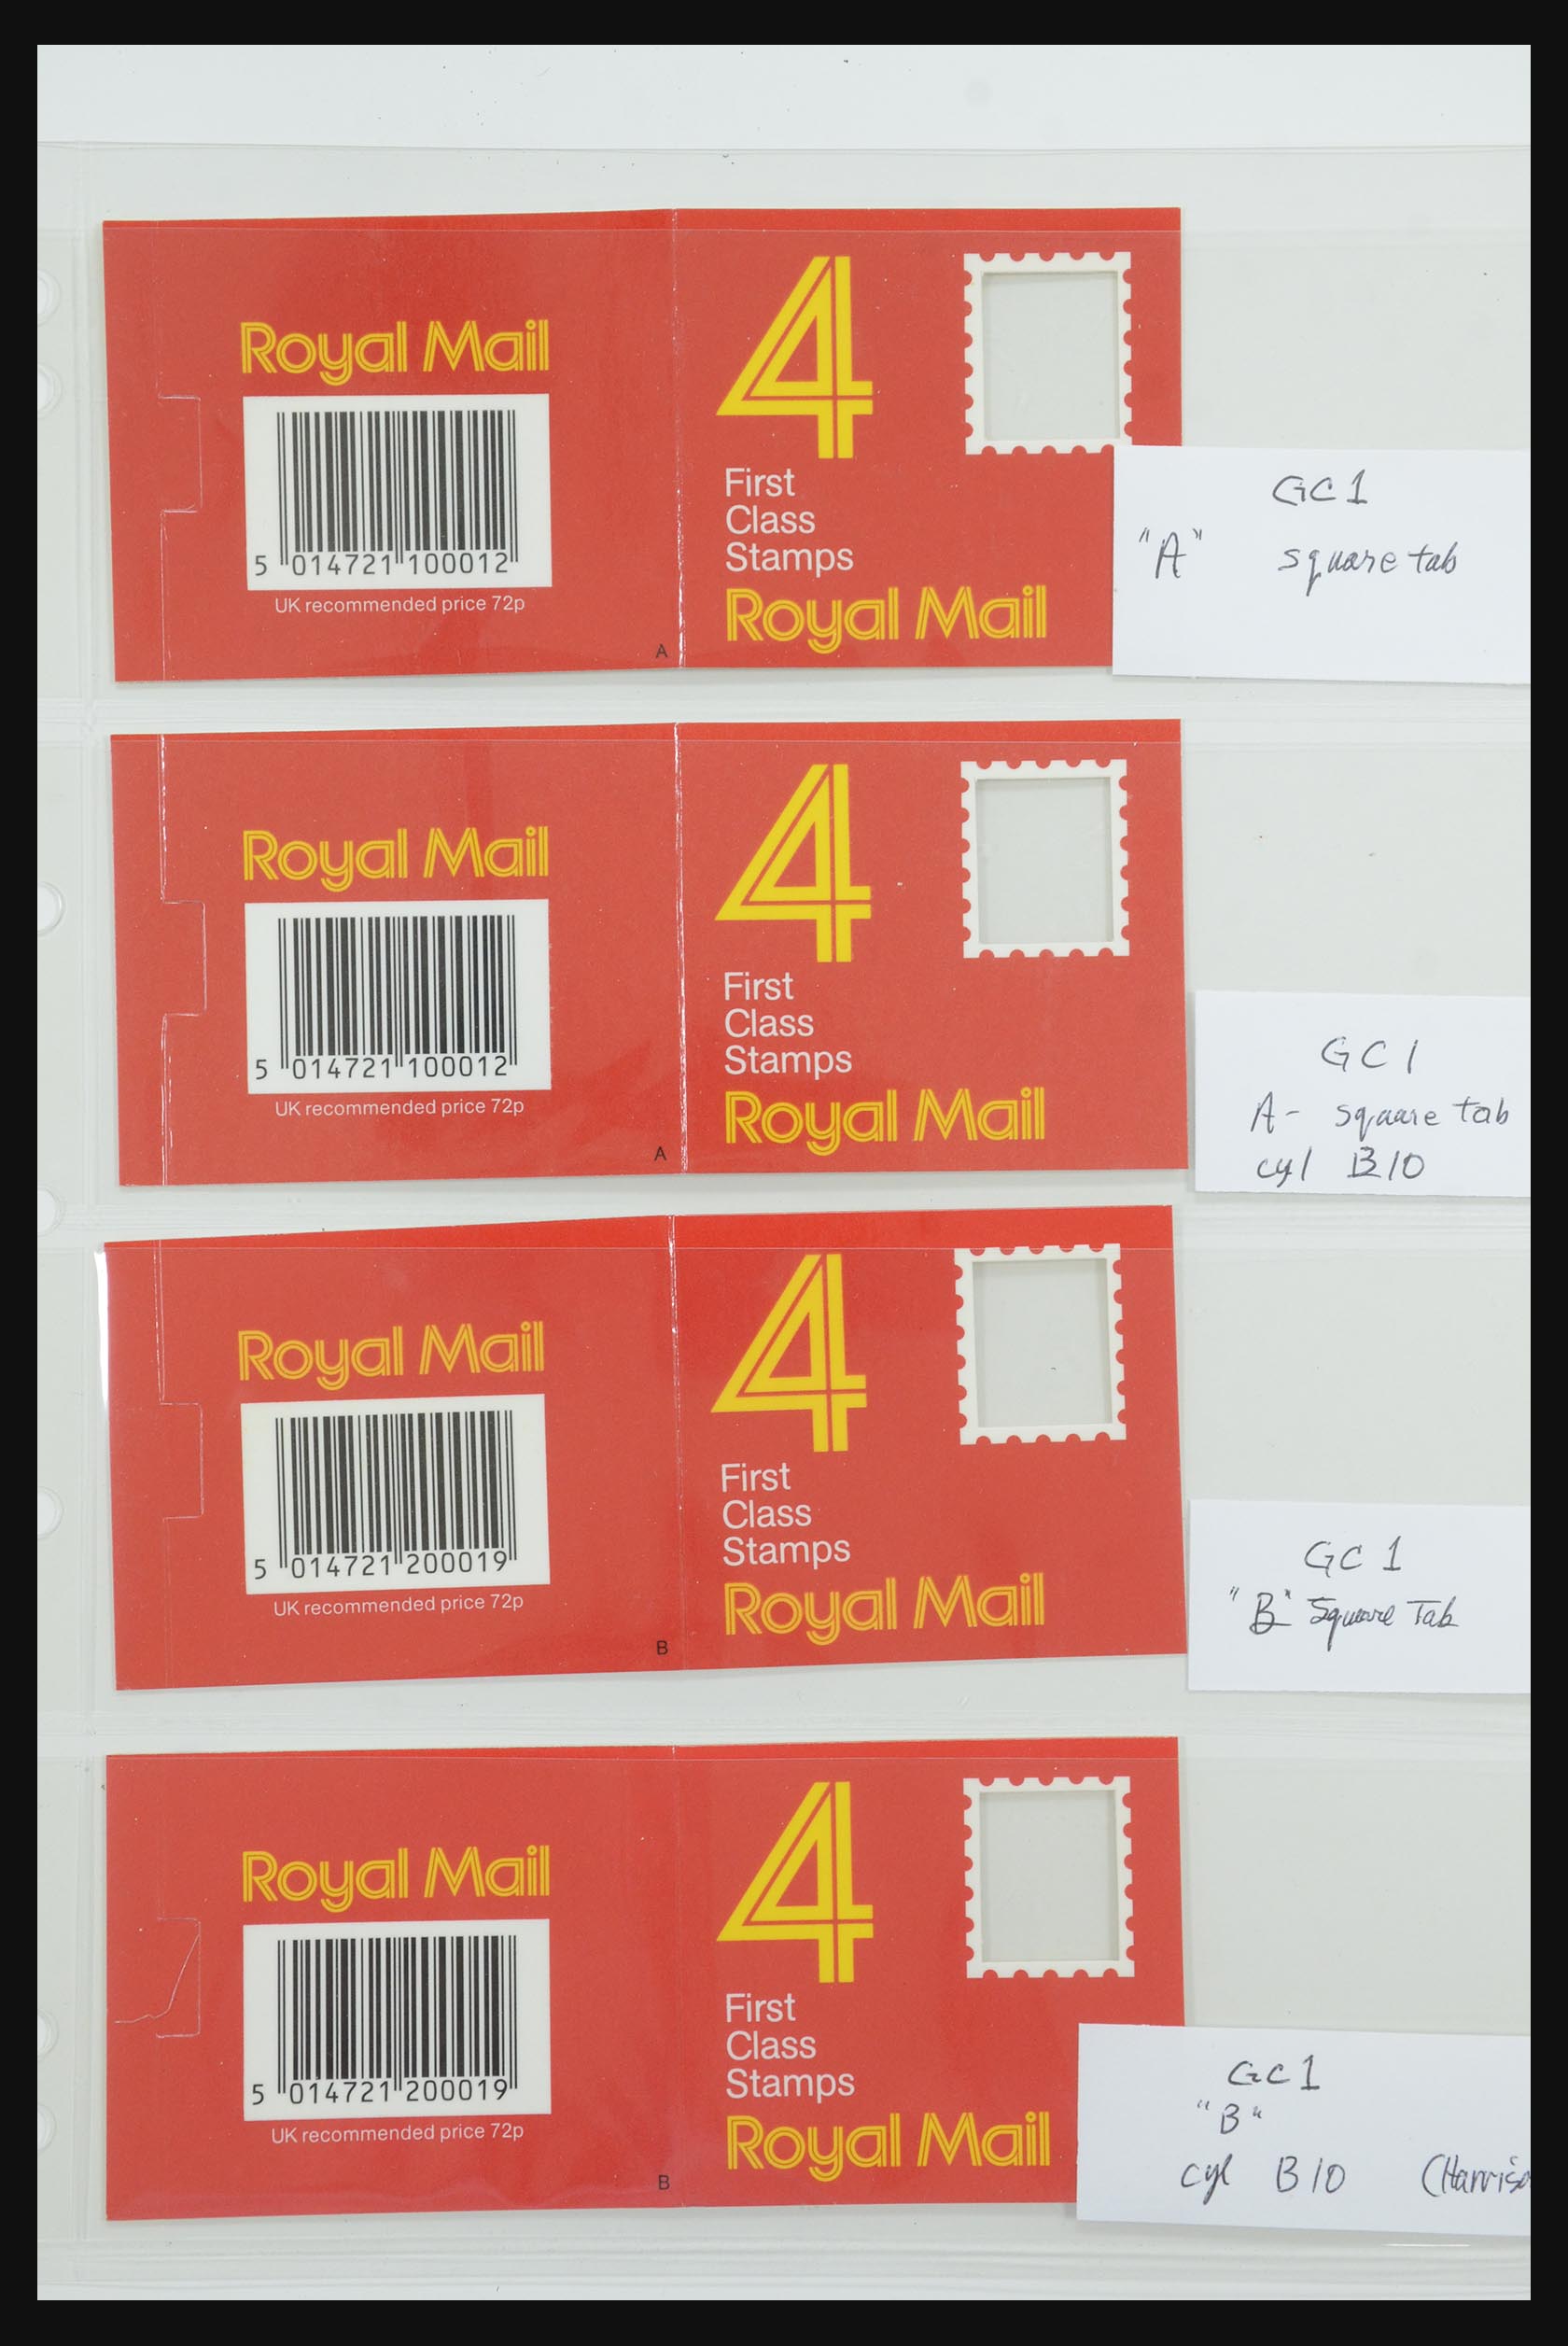 31959 011 - 31959 Great Britain stampbooklets 1987-2016!!